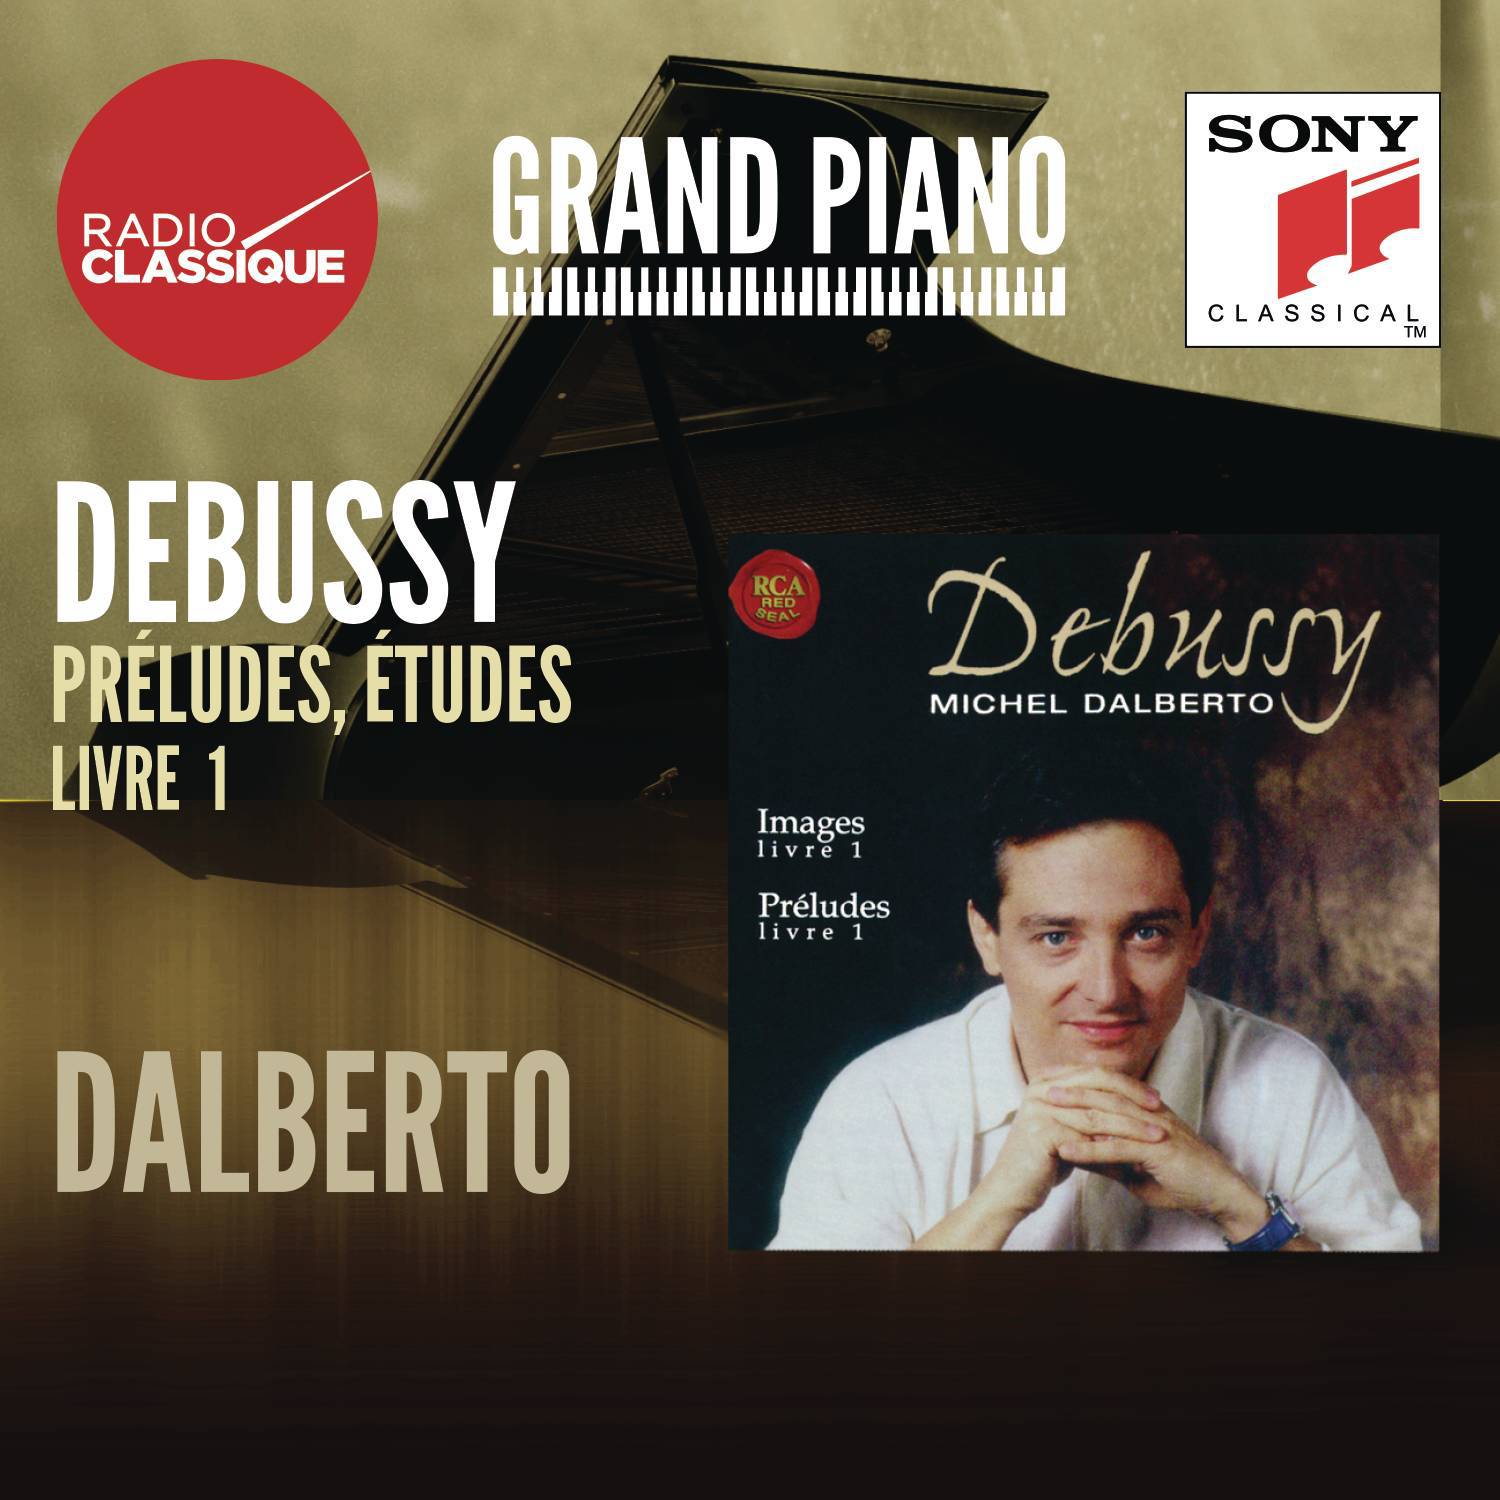 Debussy: Images, Pre ludes  Dalberto